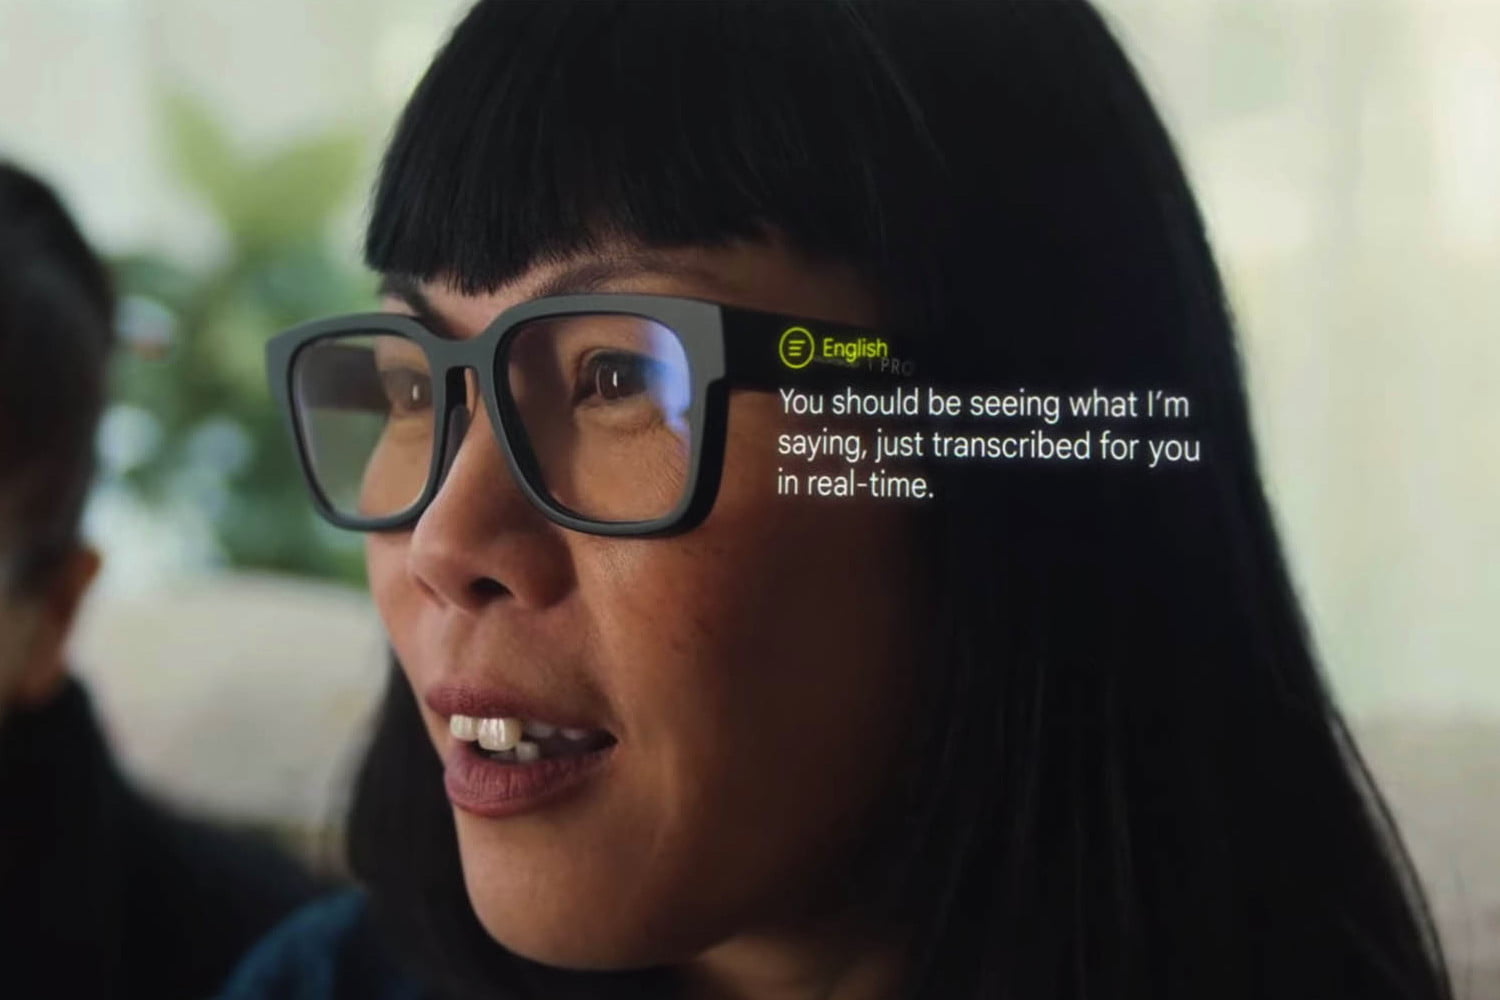 Google's life-changing AR smart glasses demo gave me shivers